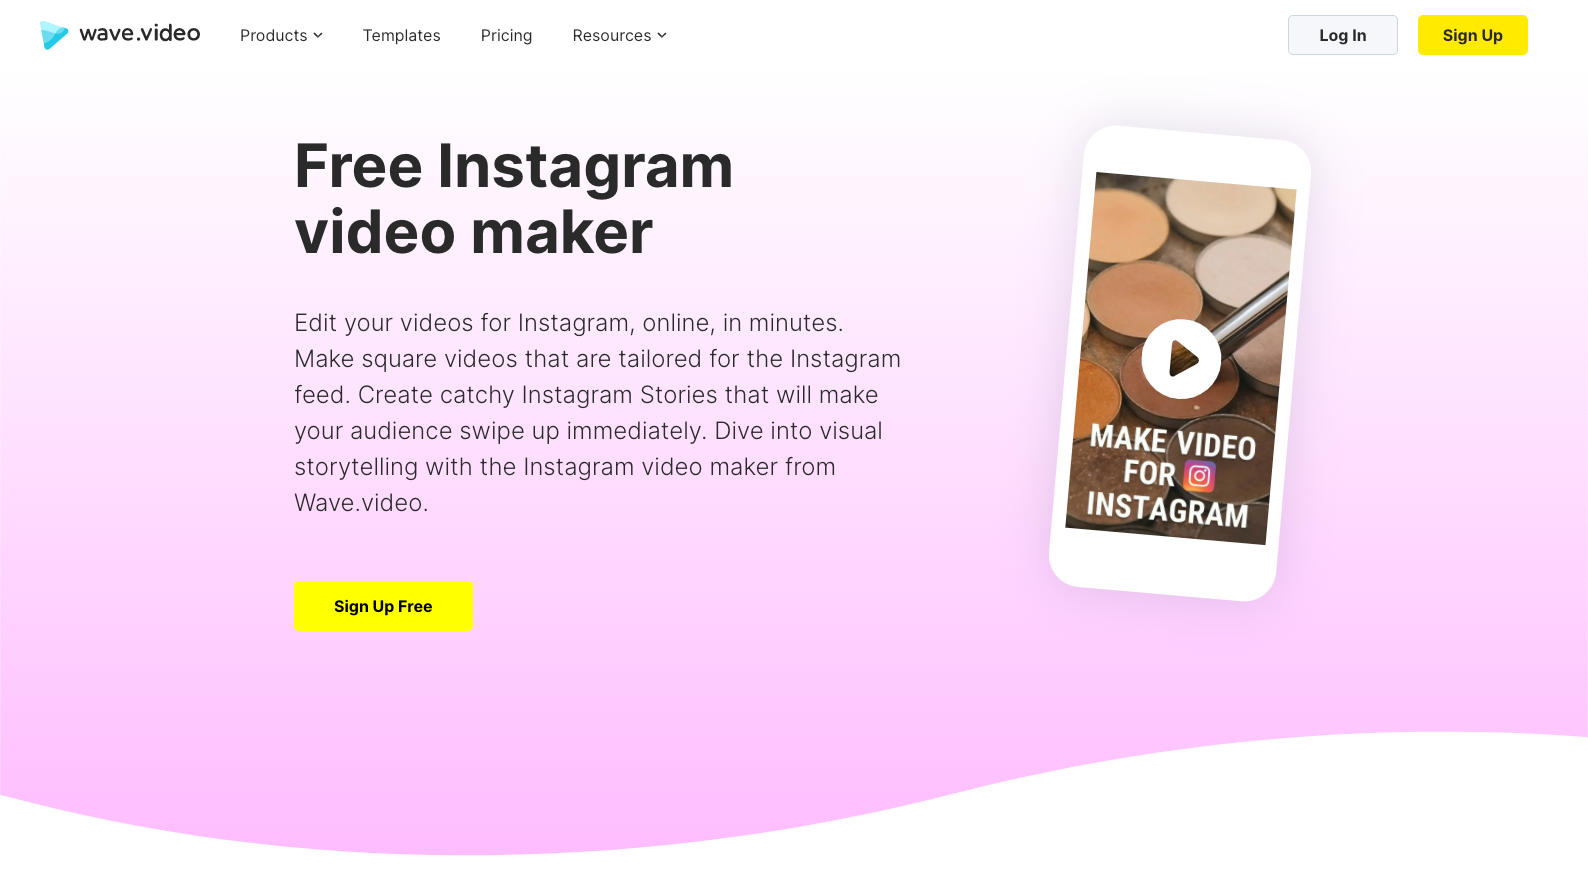 Instagram tools: Wave.video editor